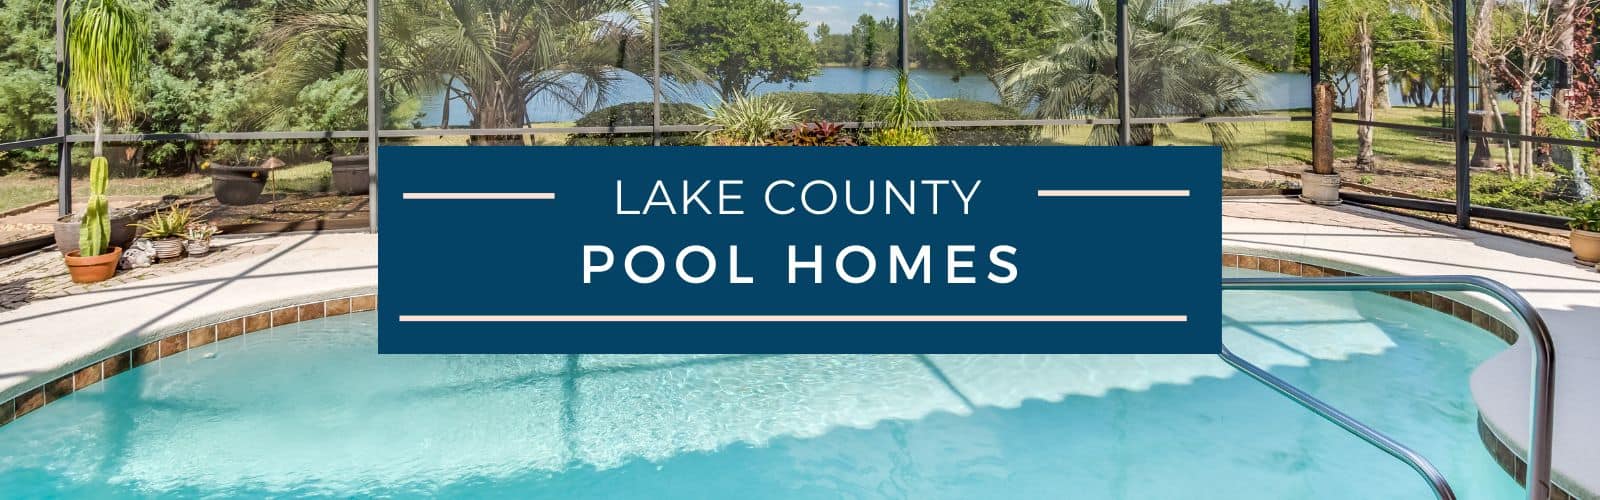 Lake County Pool Homes for Sale